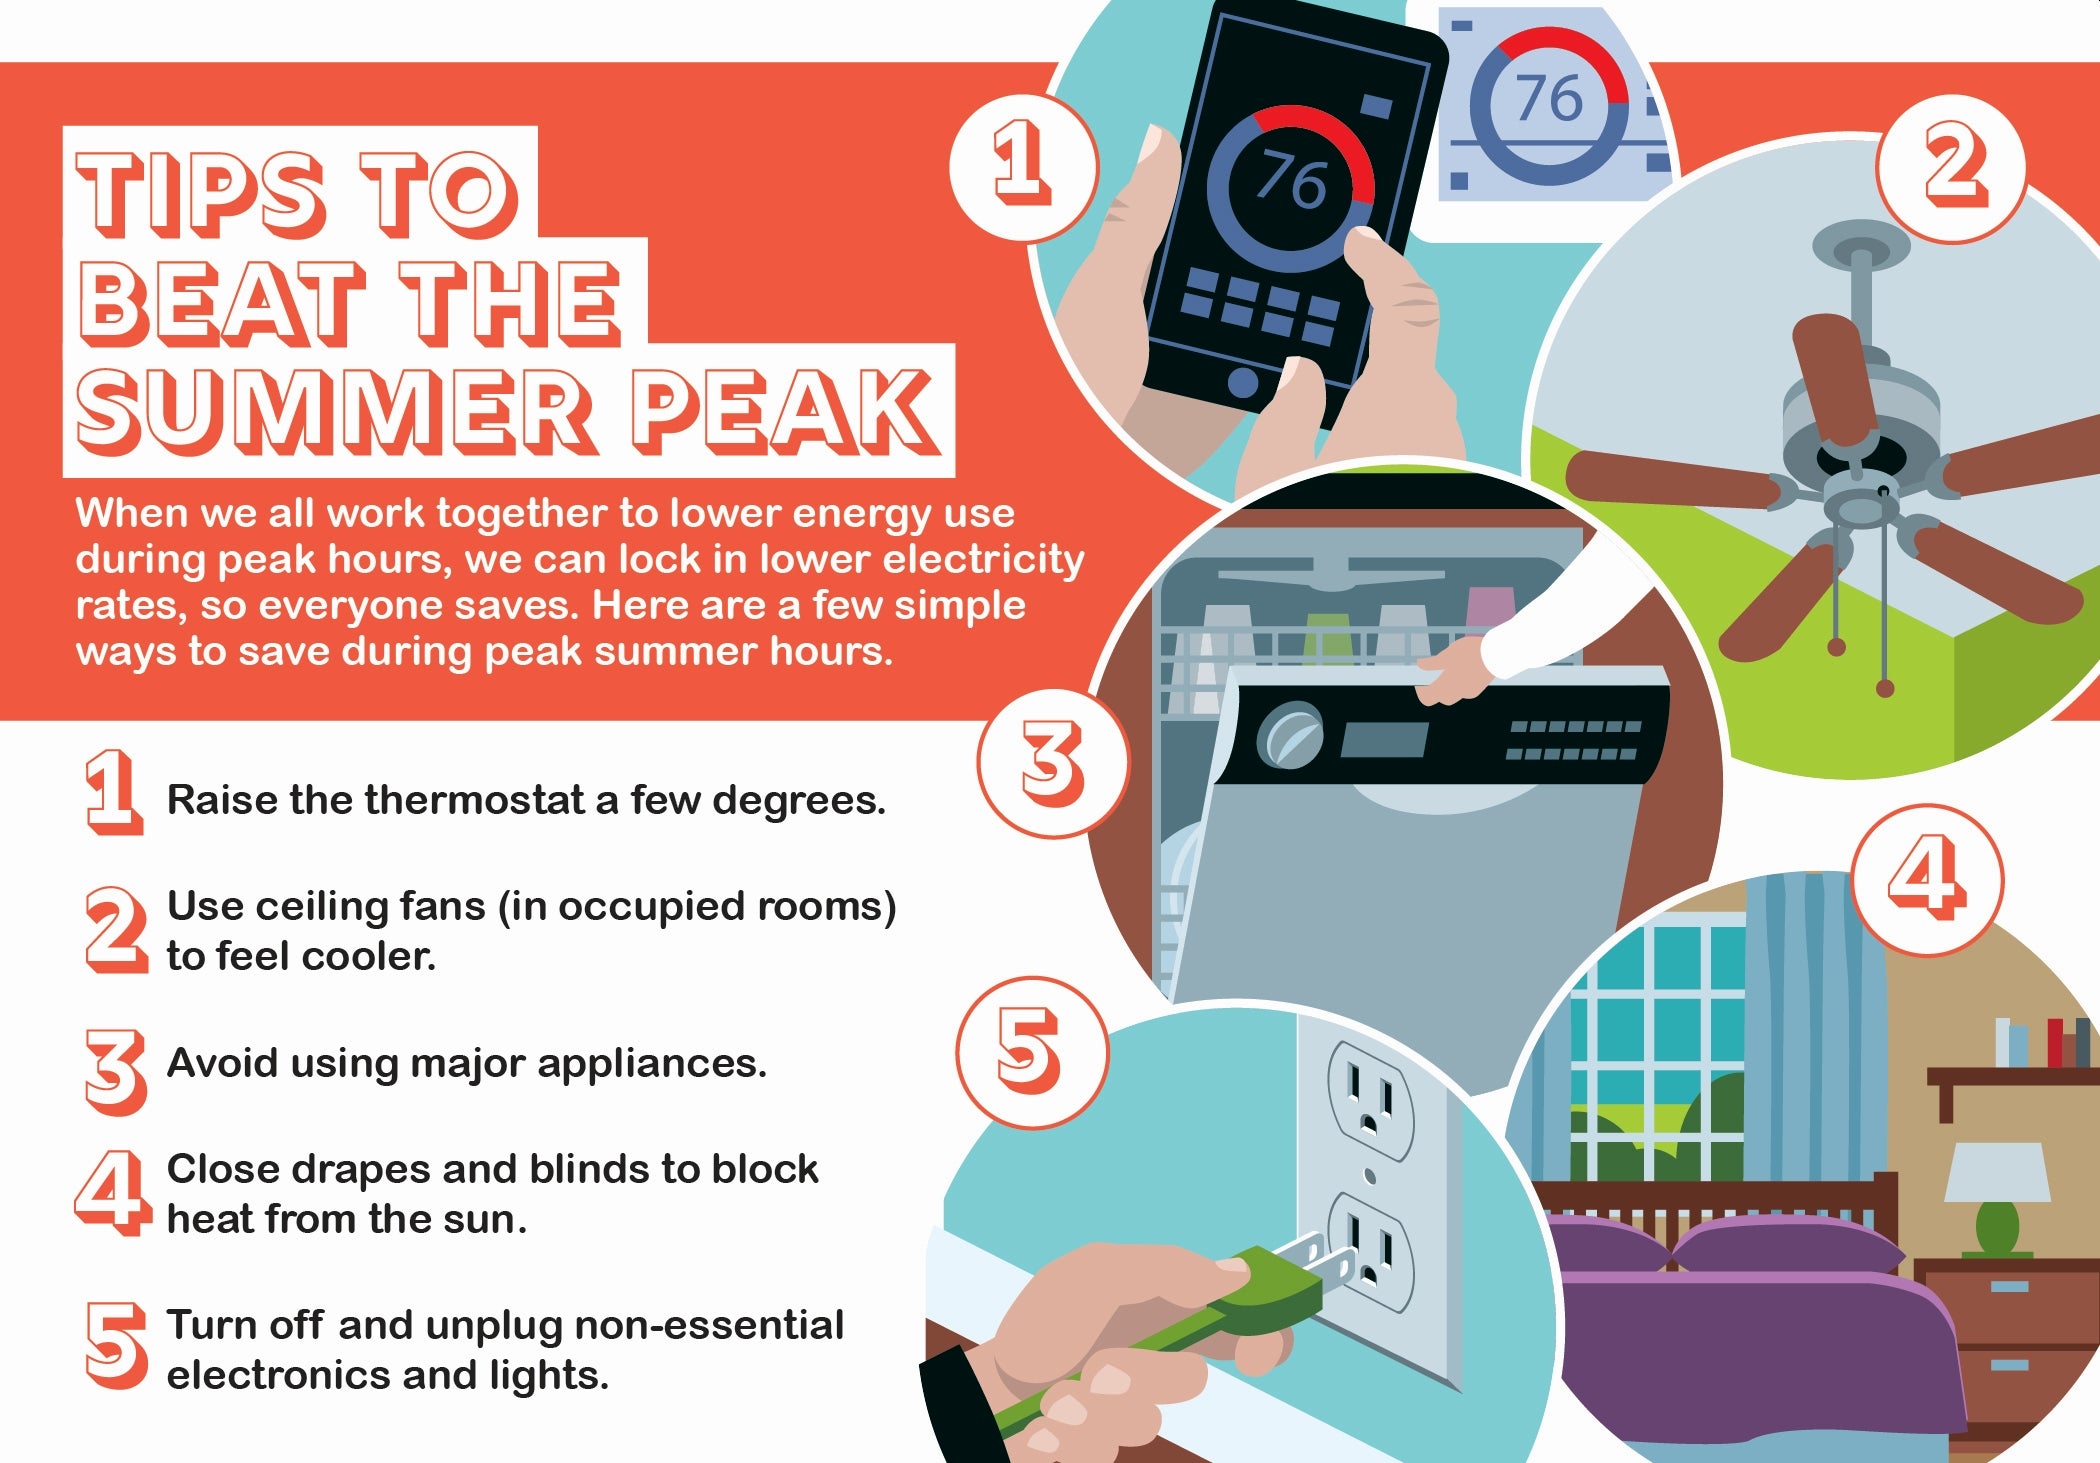 Tips to beat the summer peak.